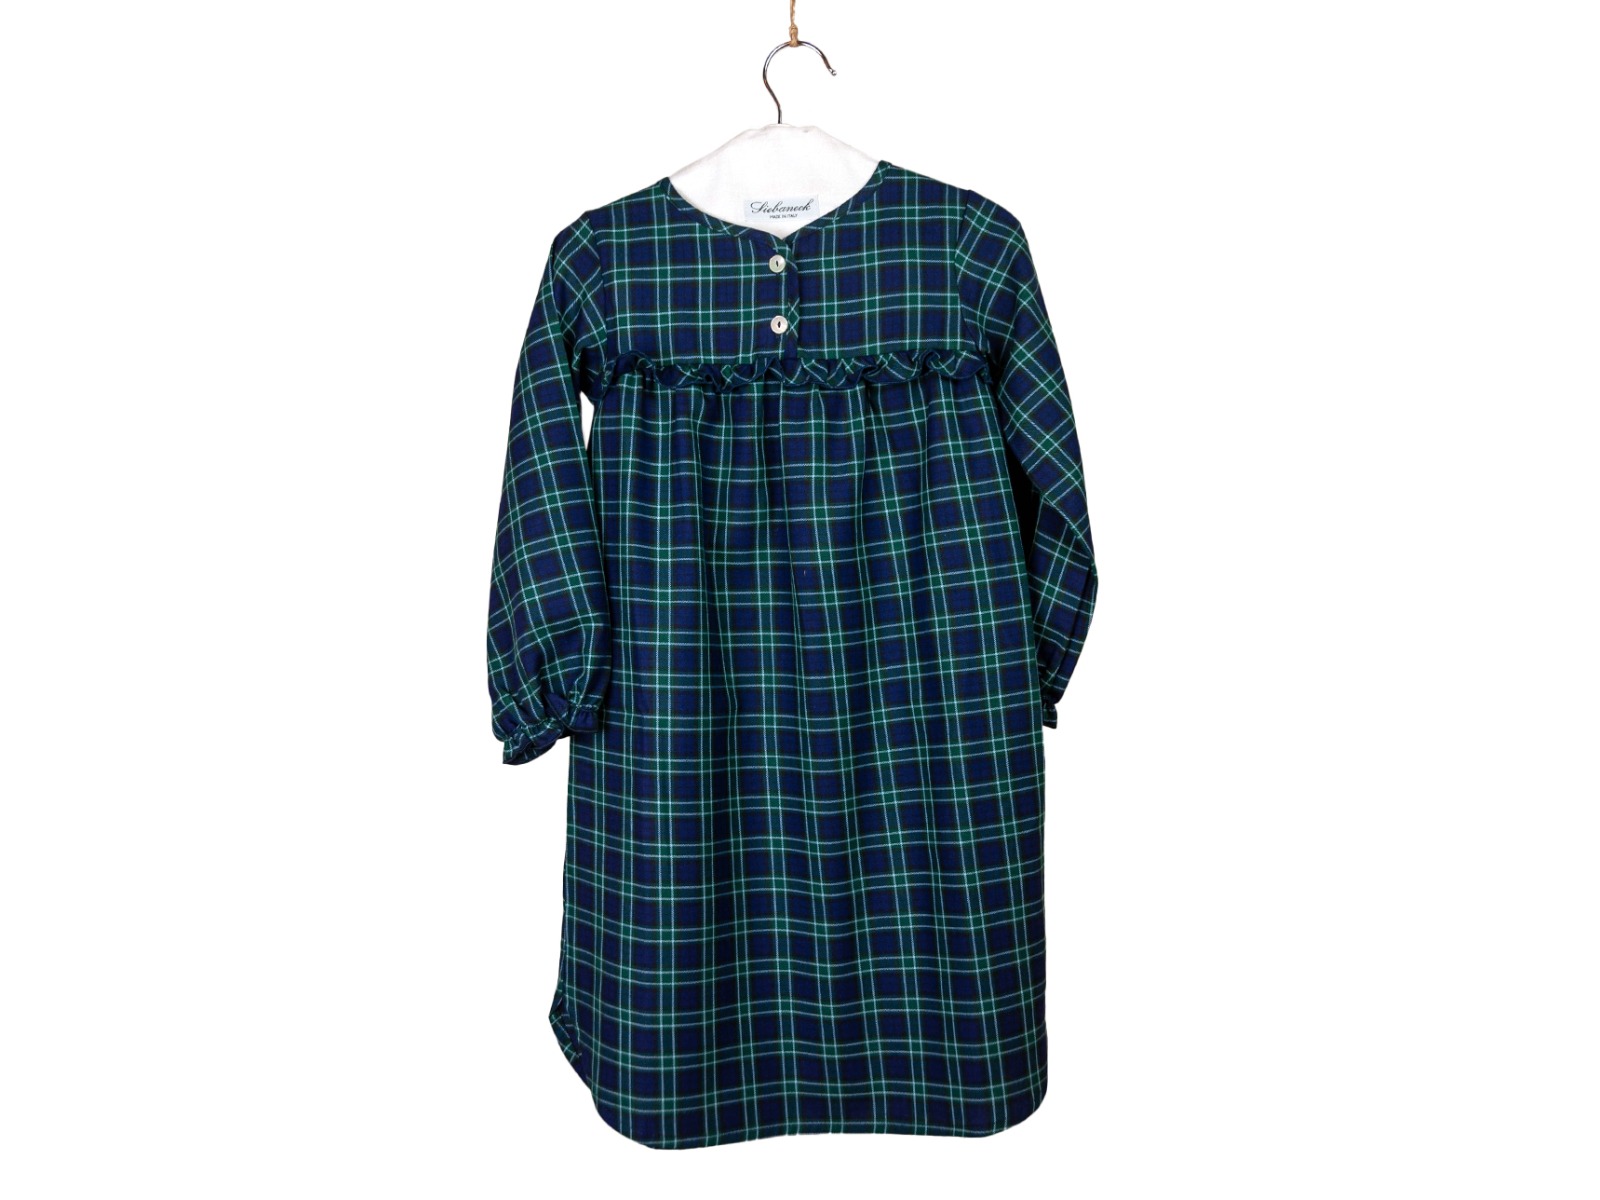 Siebaneck, i pigiami artigianali italiani: - bambina - mod. 89 Bimba blu e verde 